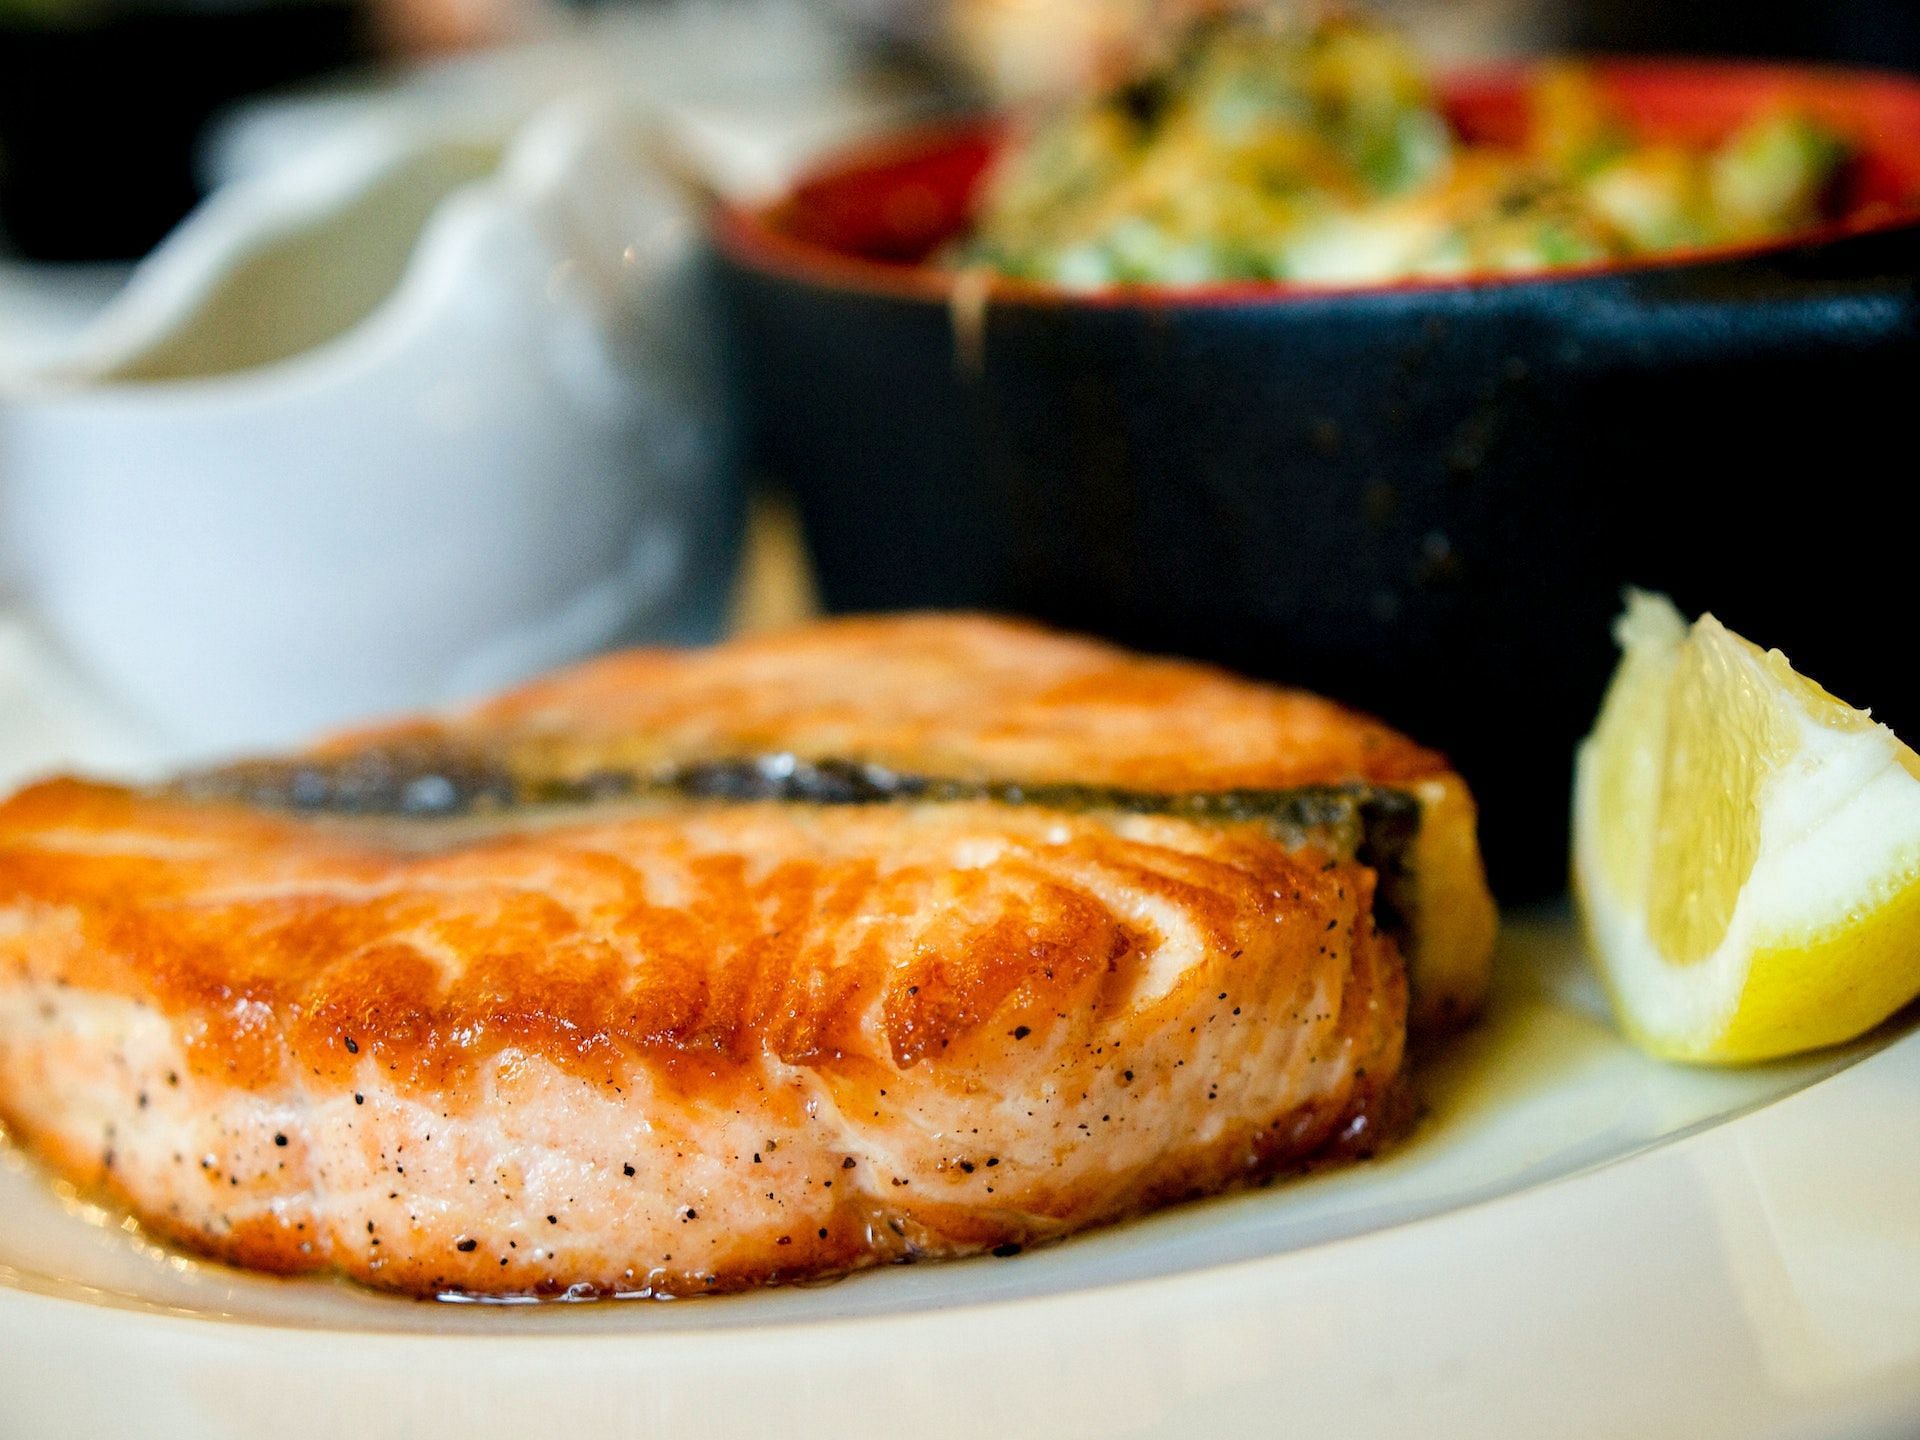 Fatty fish are rich in vitamin D. (Photo via Pexels/Krisztina Papp)